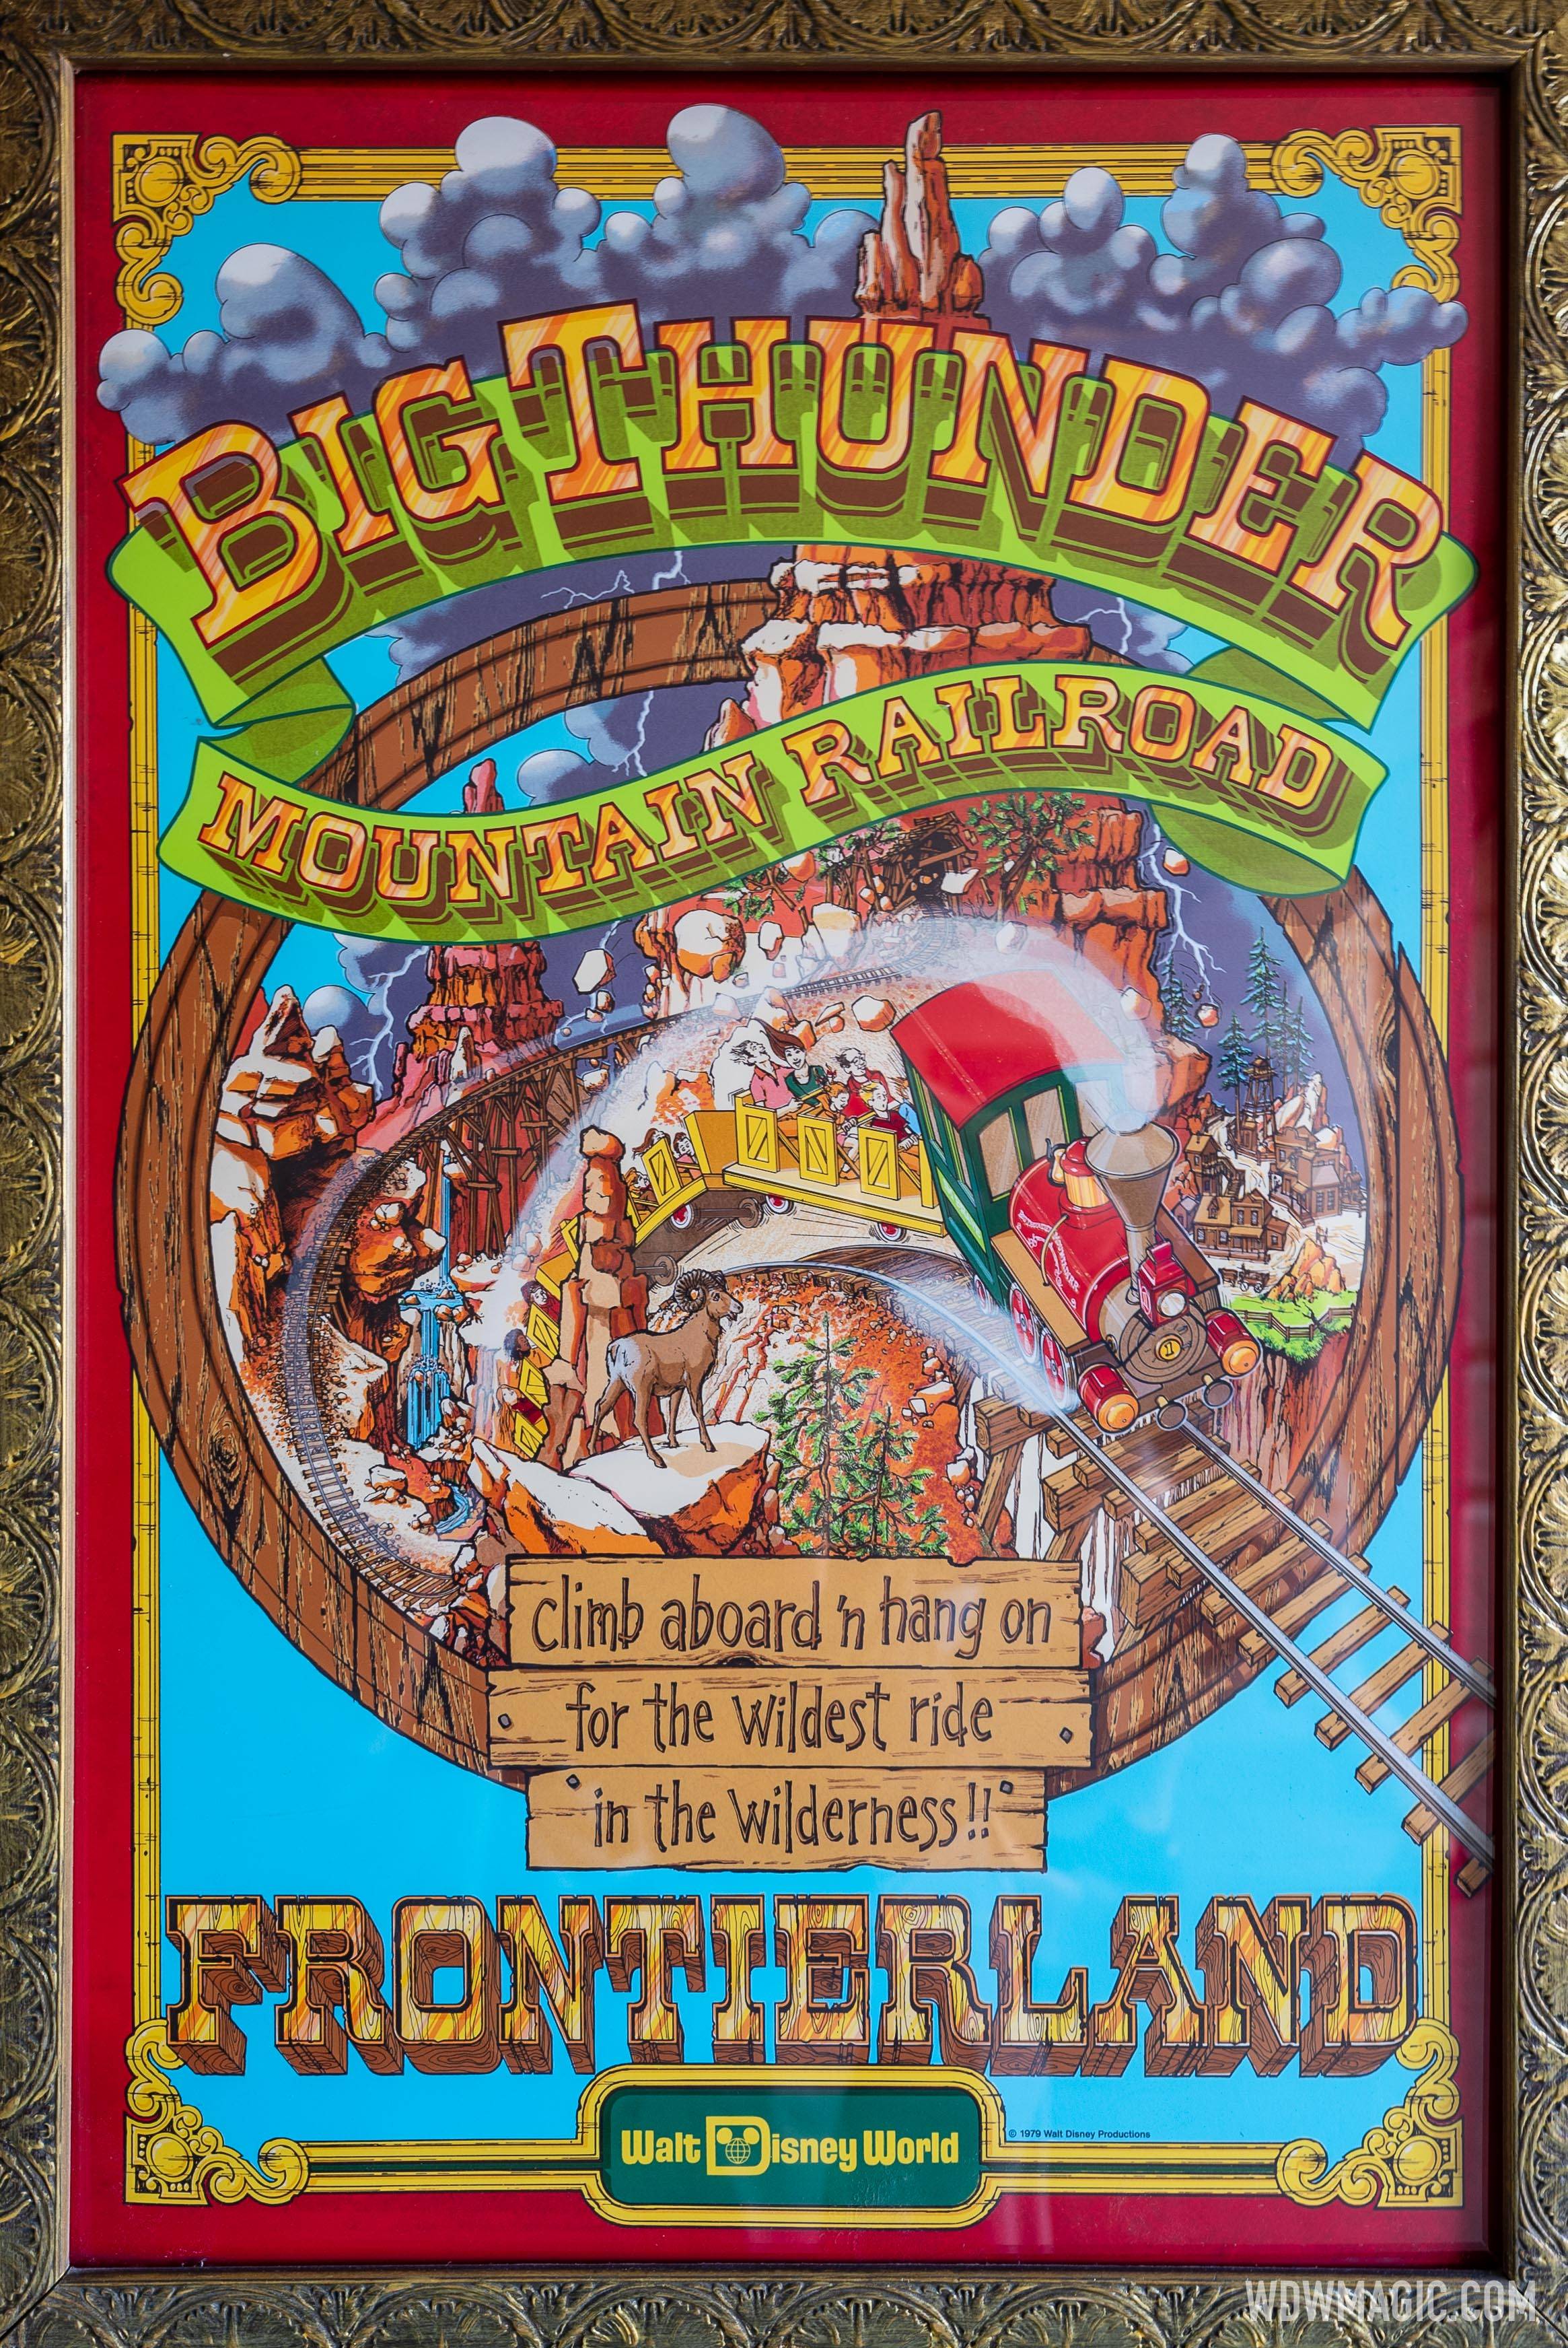 Vintage attraction posters at Magic Kingdom entrance